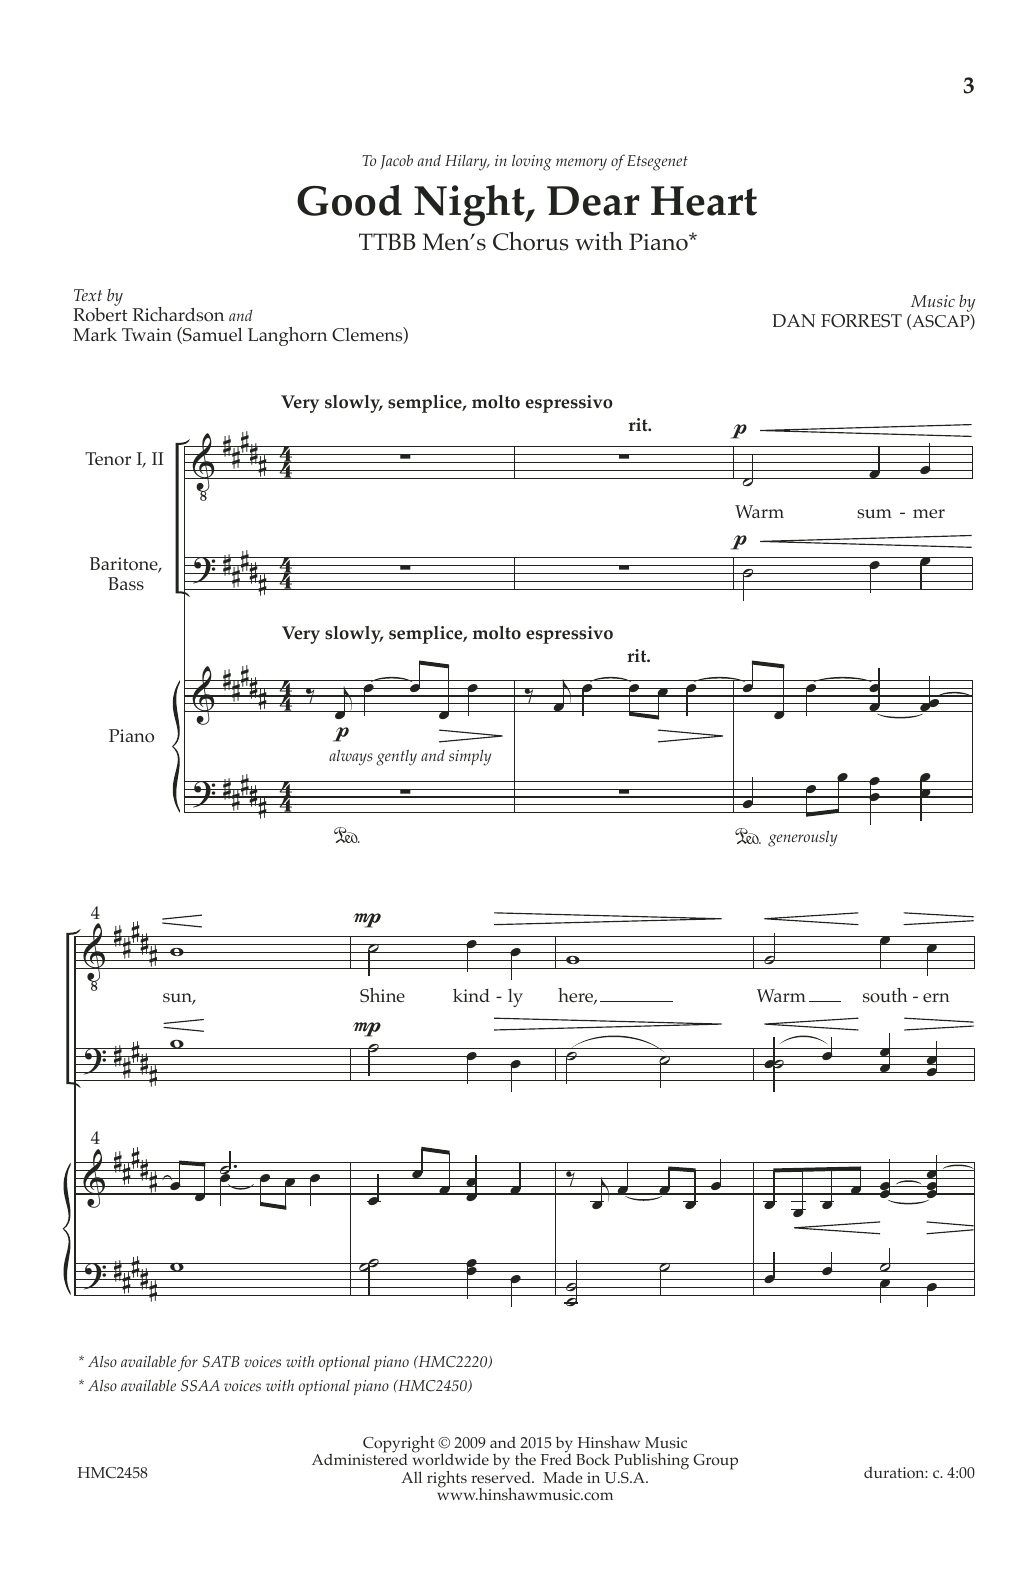 Dan Forrest Good Night, Dear Heart Sheet Music Notes & Chords for TTBB Choir - Download or Print PDF